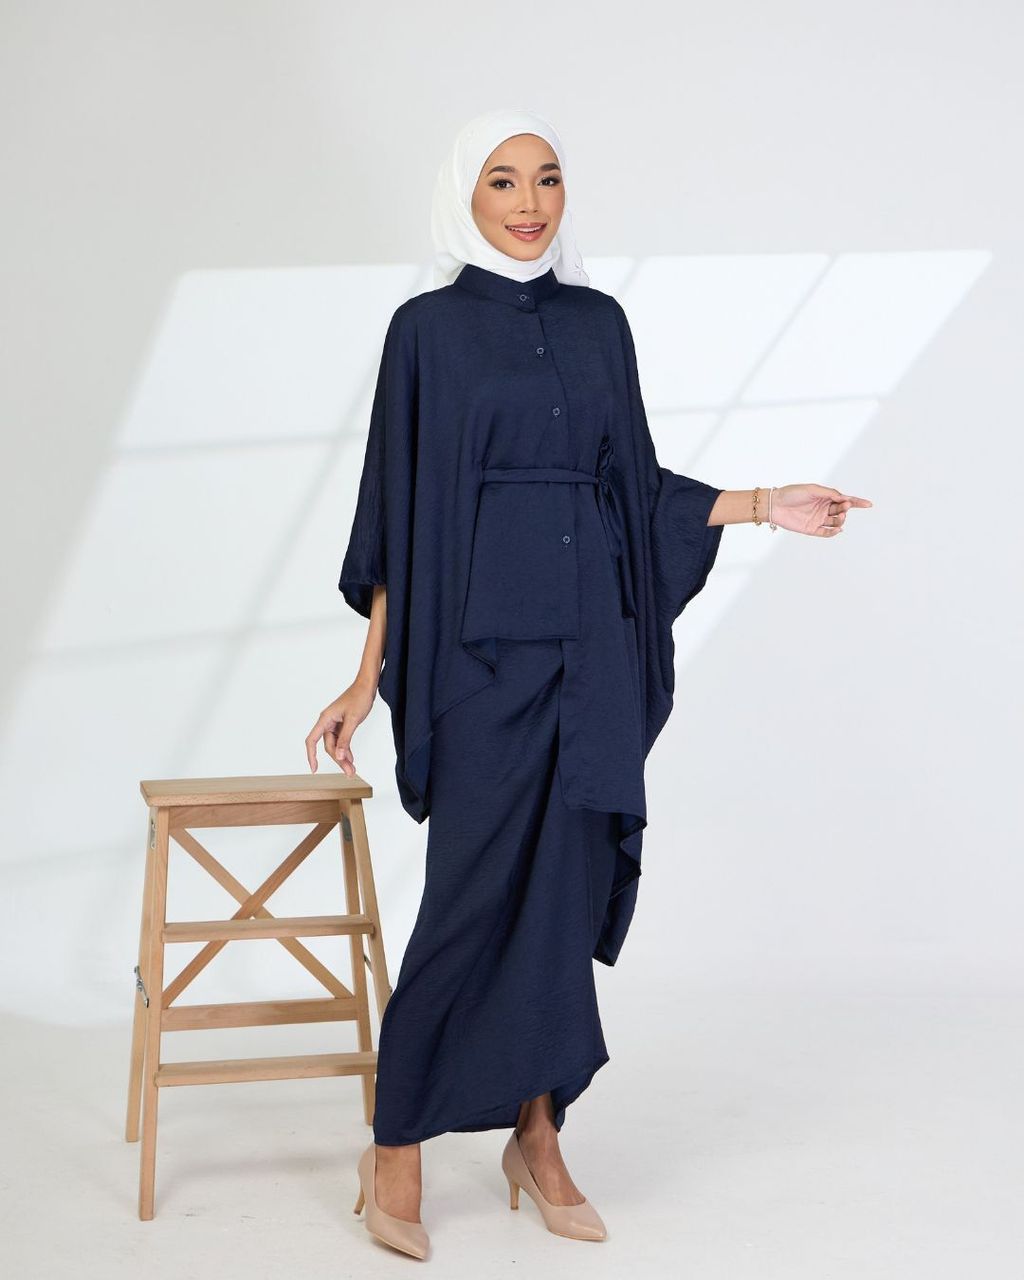 haura-wear-vivy-skirt-set-sulam-embroidery-pario-klasik-tradisional-mini kebaya-fabrik eyelet-raya-muslimah-long-sleeve-baju-skirt-kain-perempuan-baju-sepasang (17)